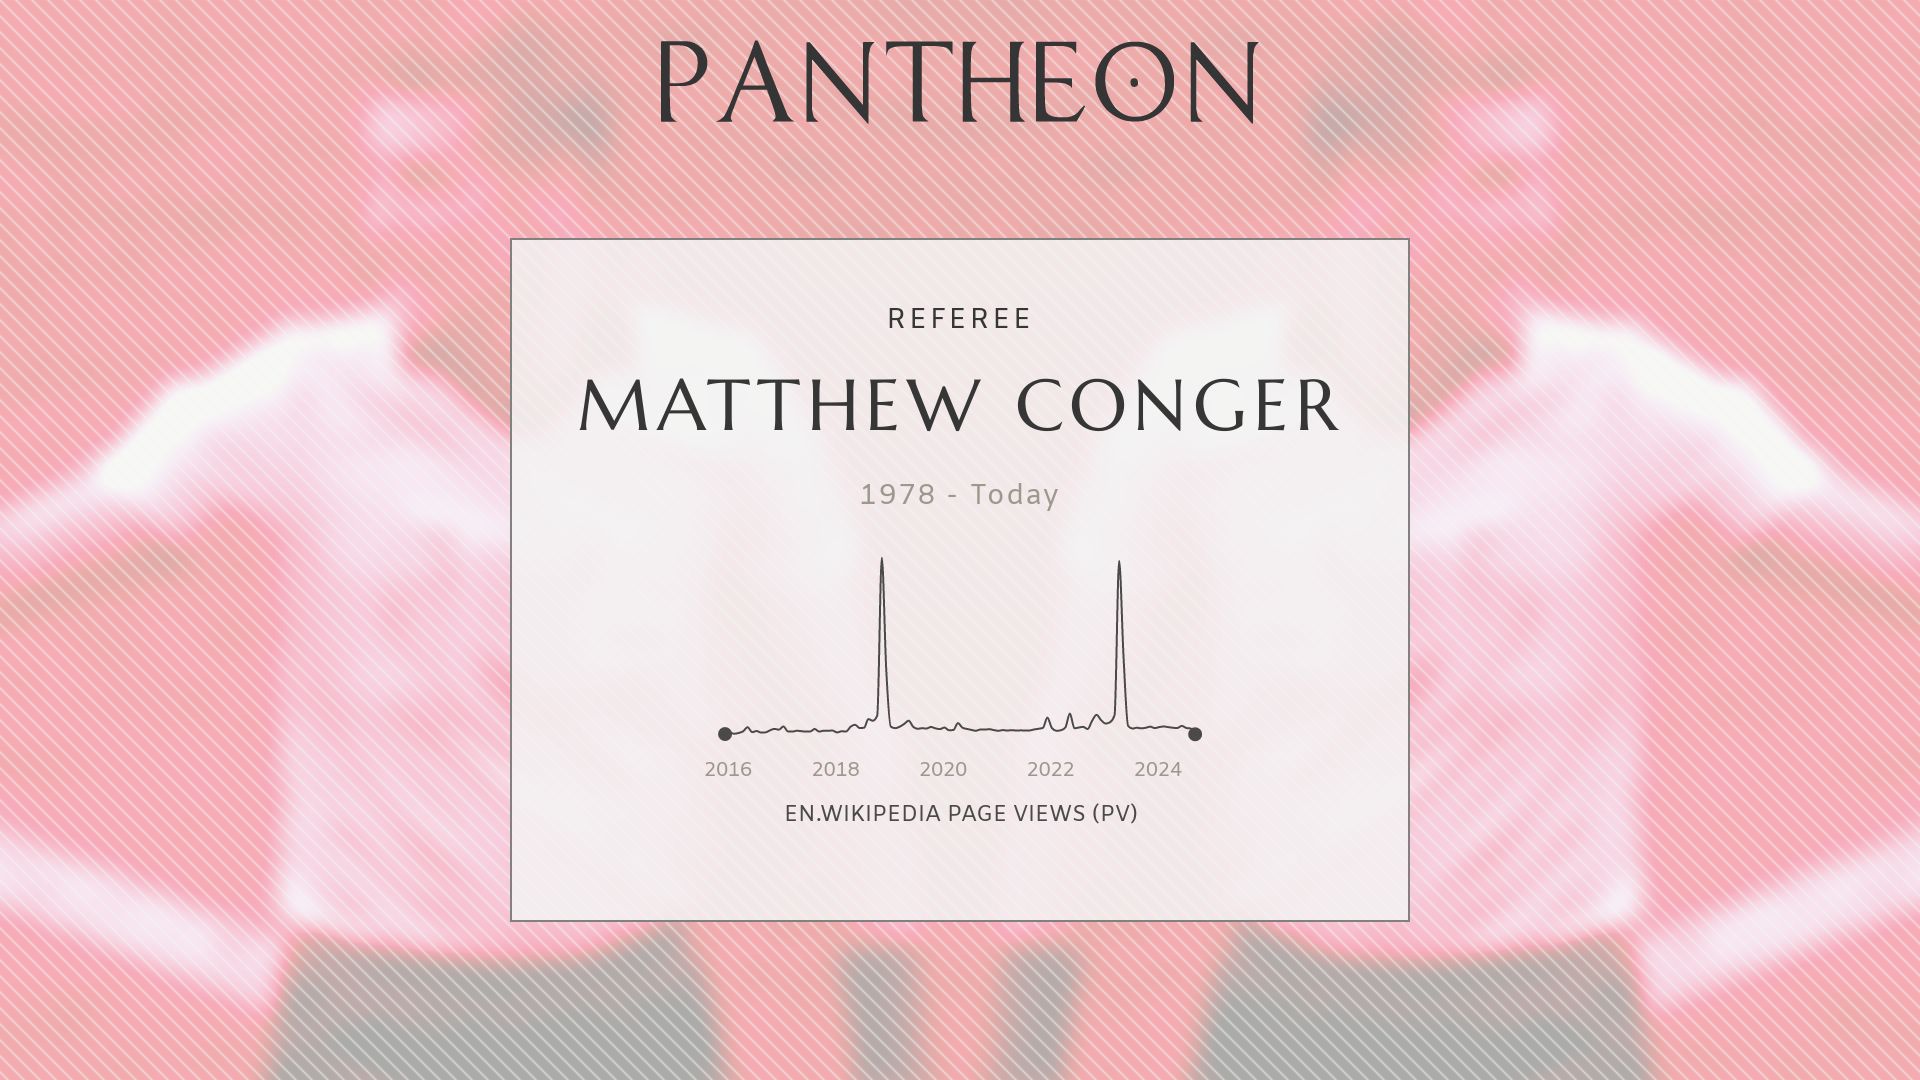 Matthew Conger Biography